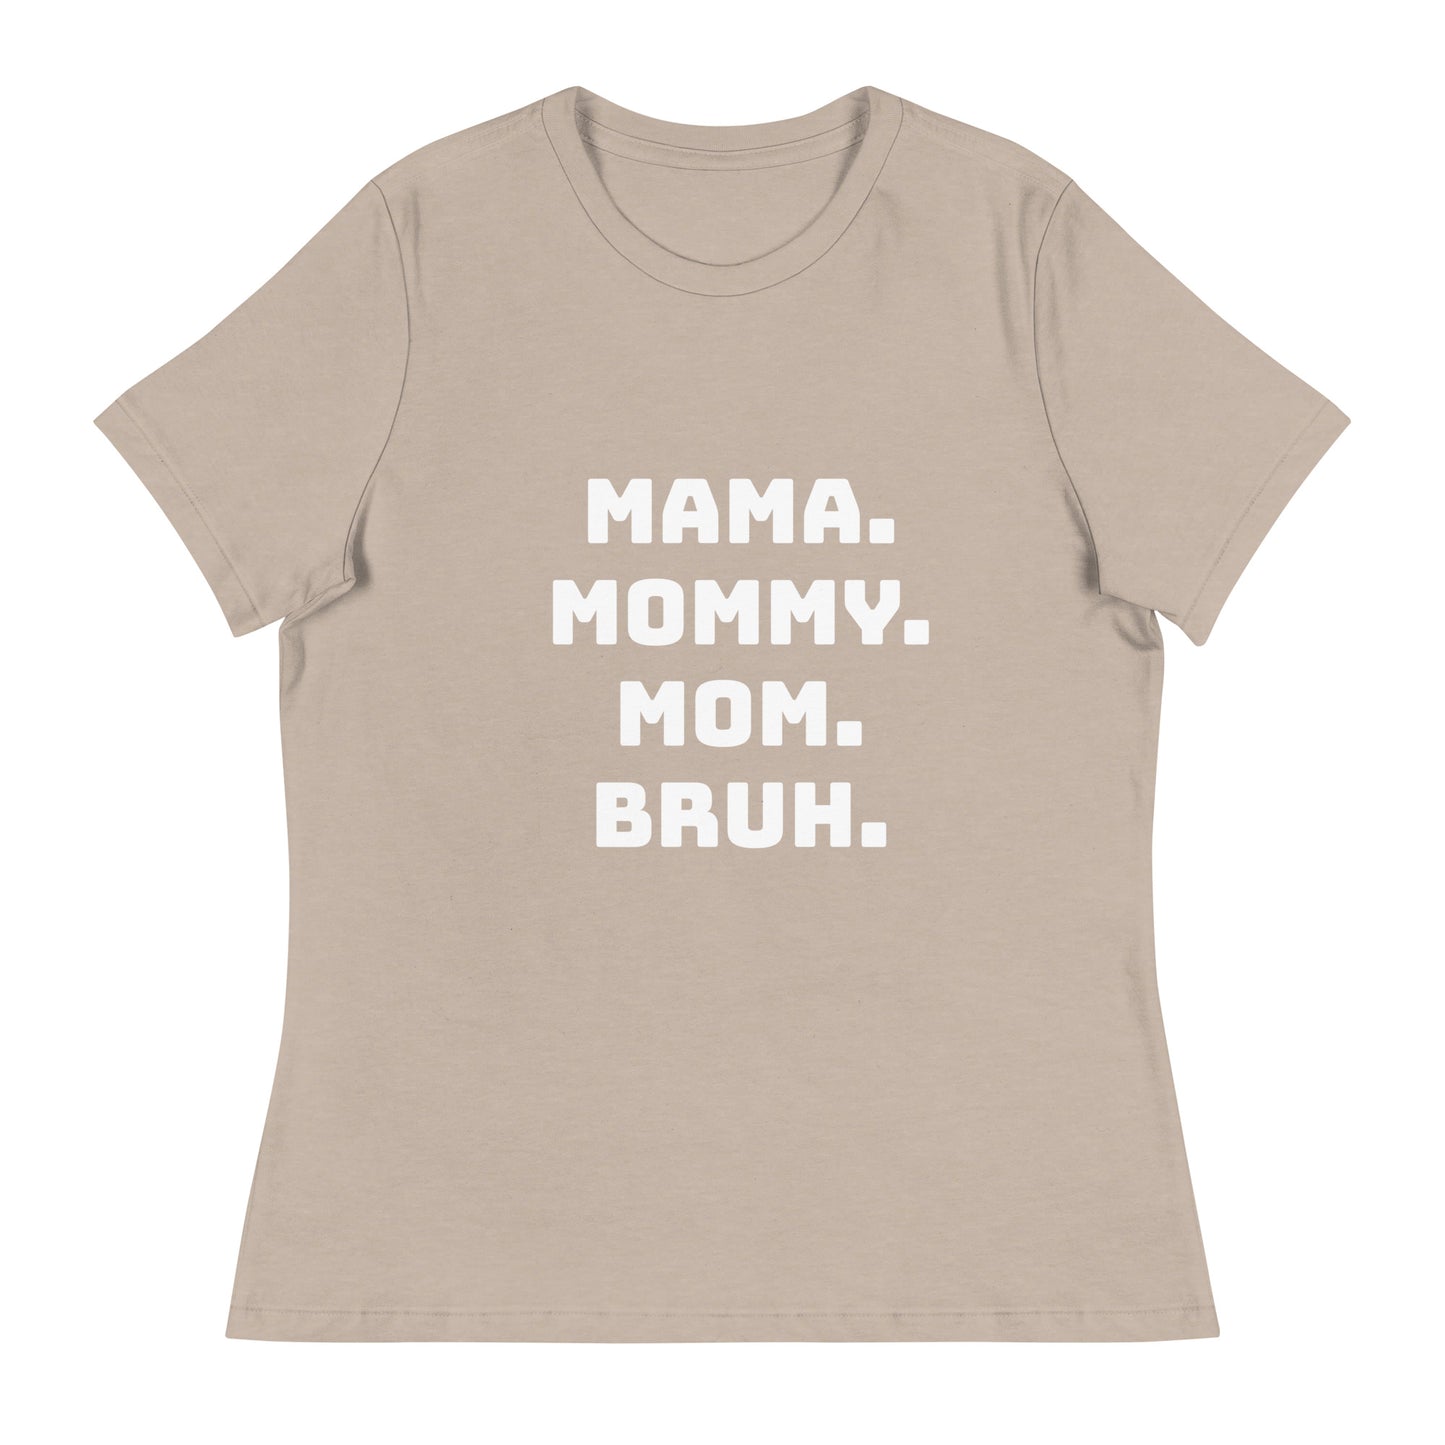 Mama Mommy Mom Bruh Printed T-Shirt